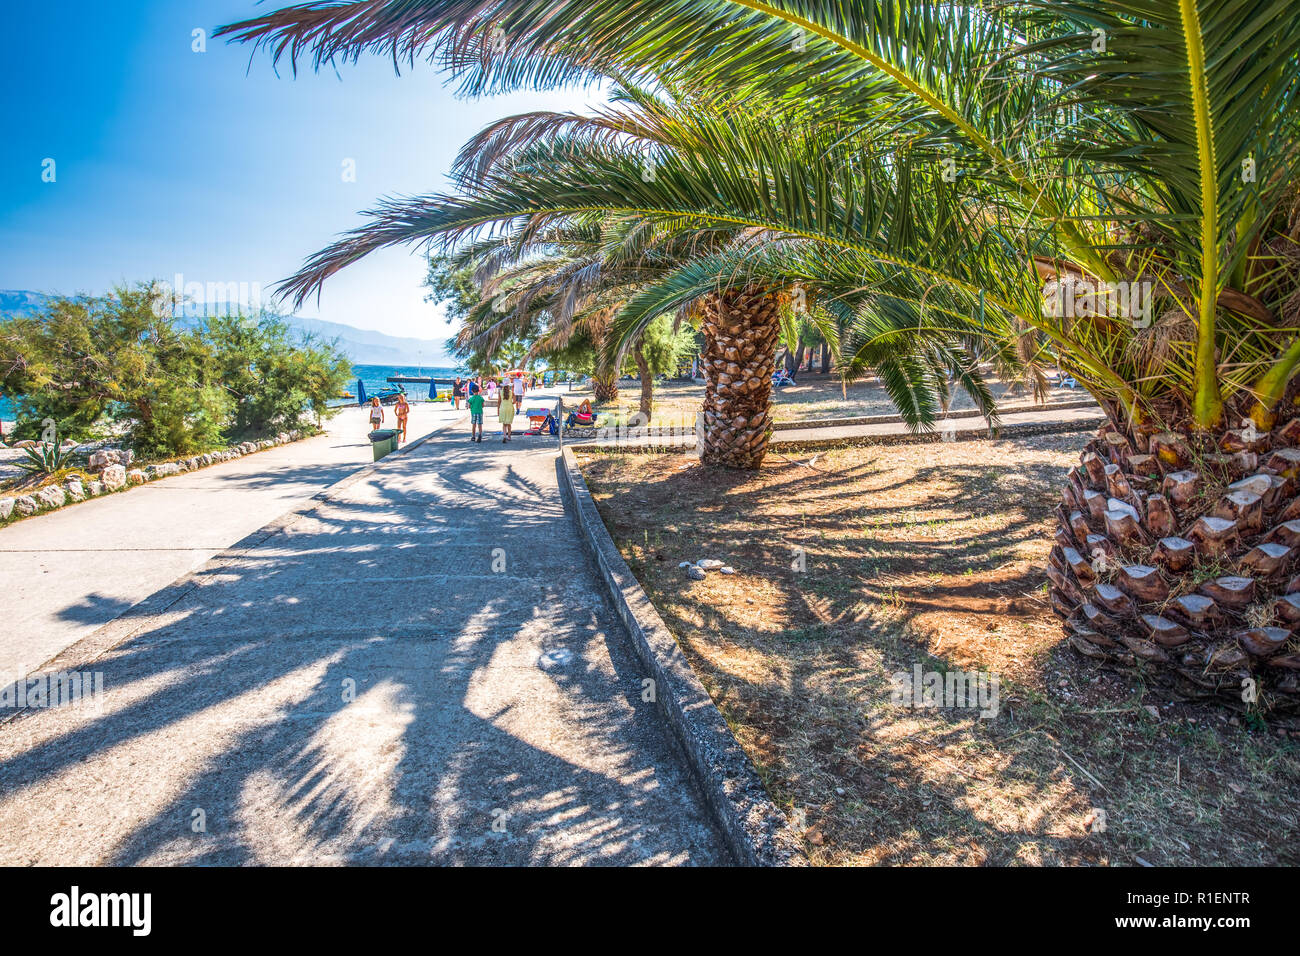 BRAC, CROATIA - August 6, 2018 - Stone beach on Brac island with turquoise clear ocean water, Supetar, Brac, Croatia Stock Photo